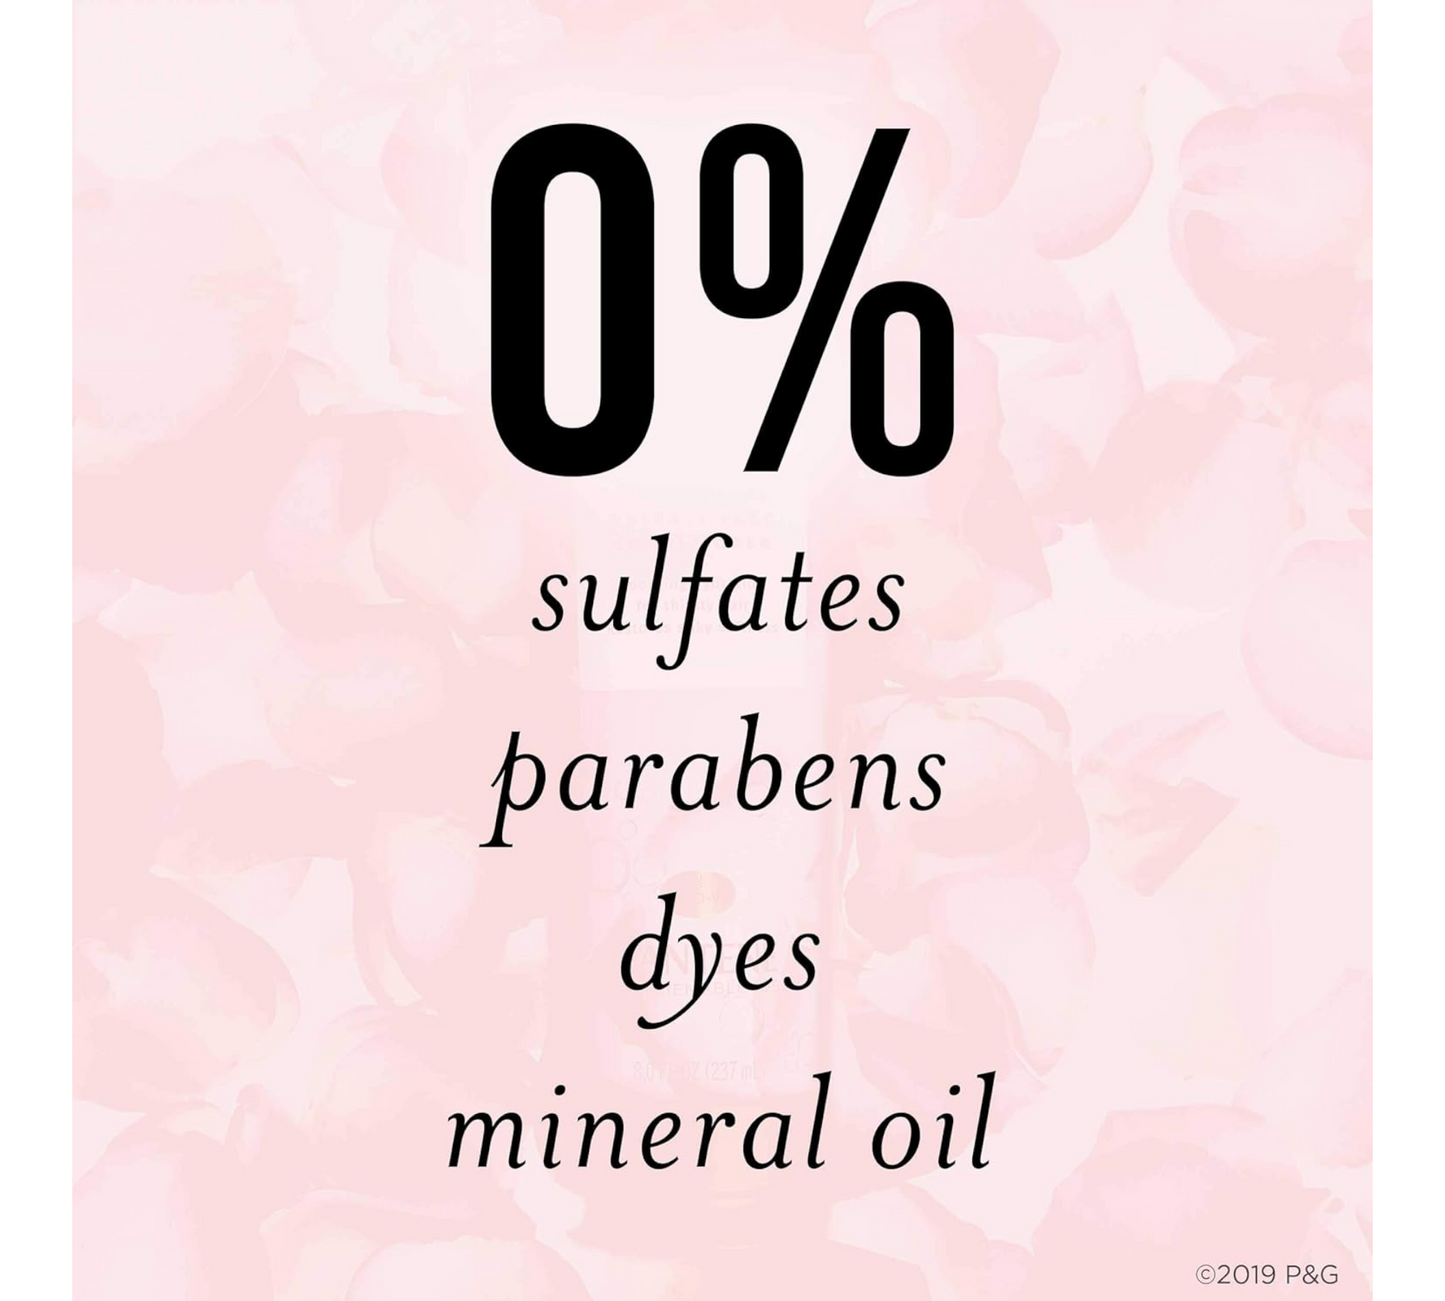 Pantene Rose Water Shampoo: Sulfate-Free Miracle Moisture,